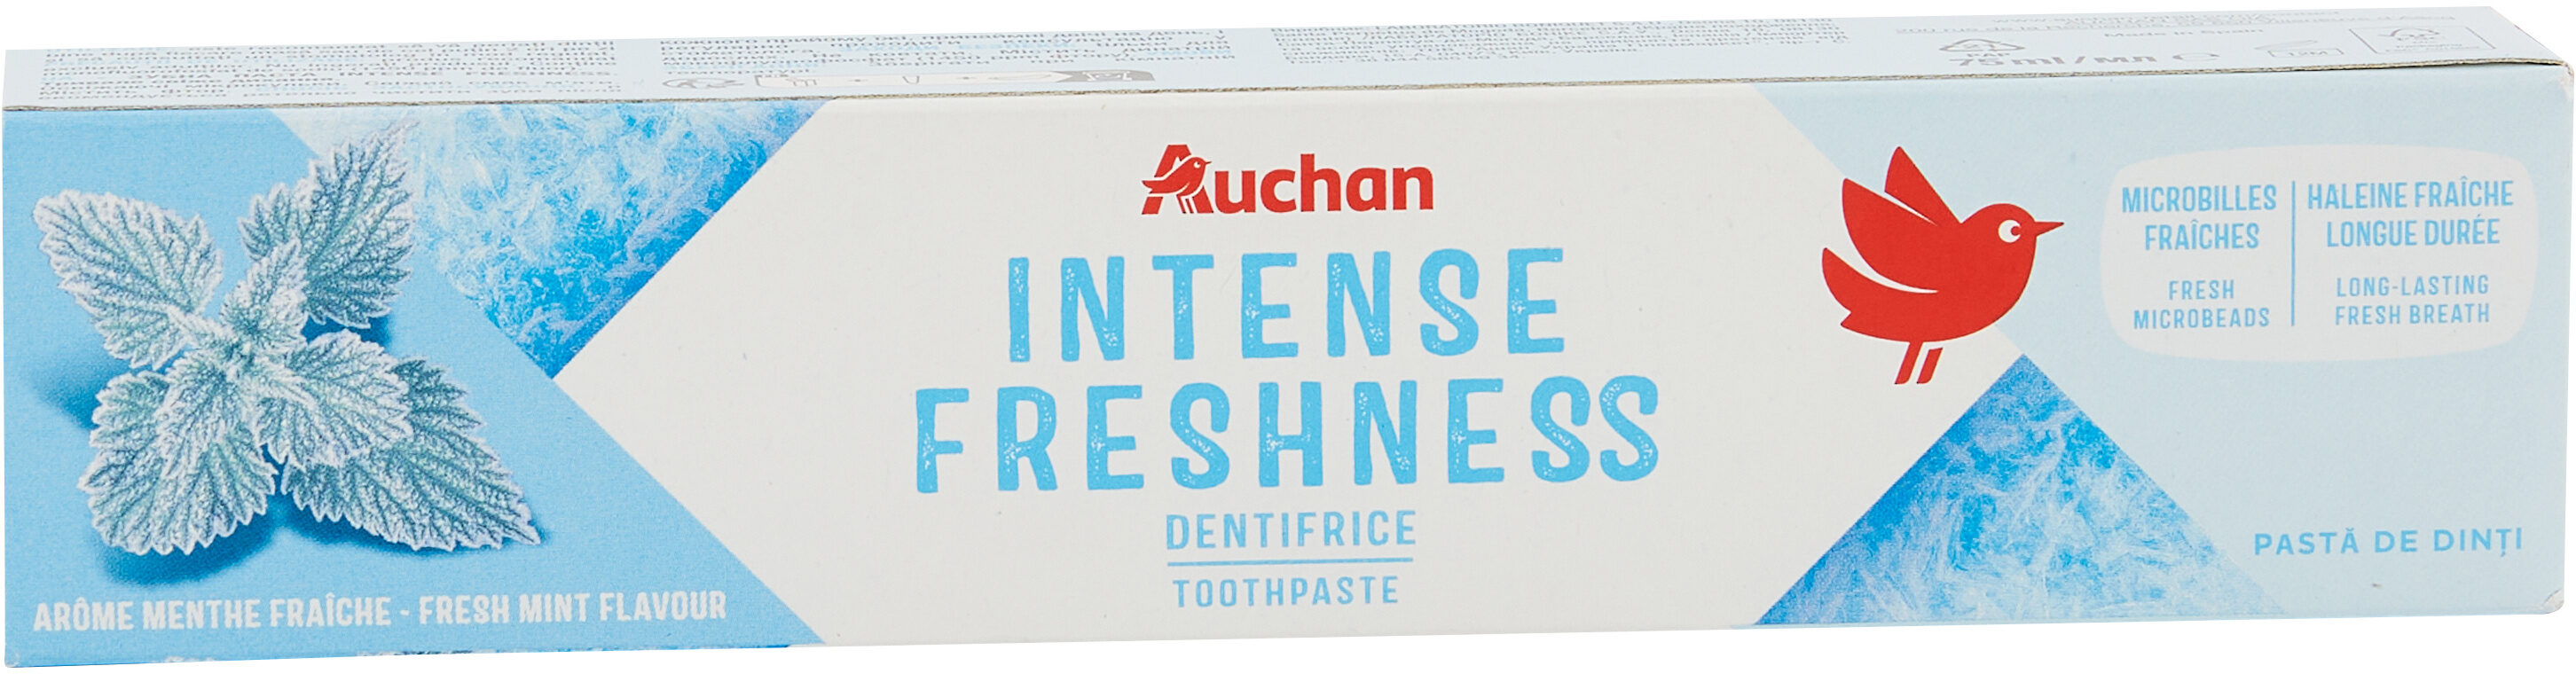 Auchan dentifrice fraîcheur intense tube 75ml - Produkt - fr